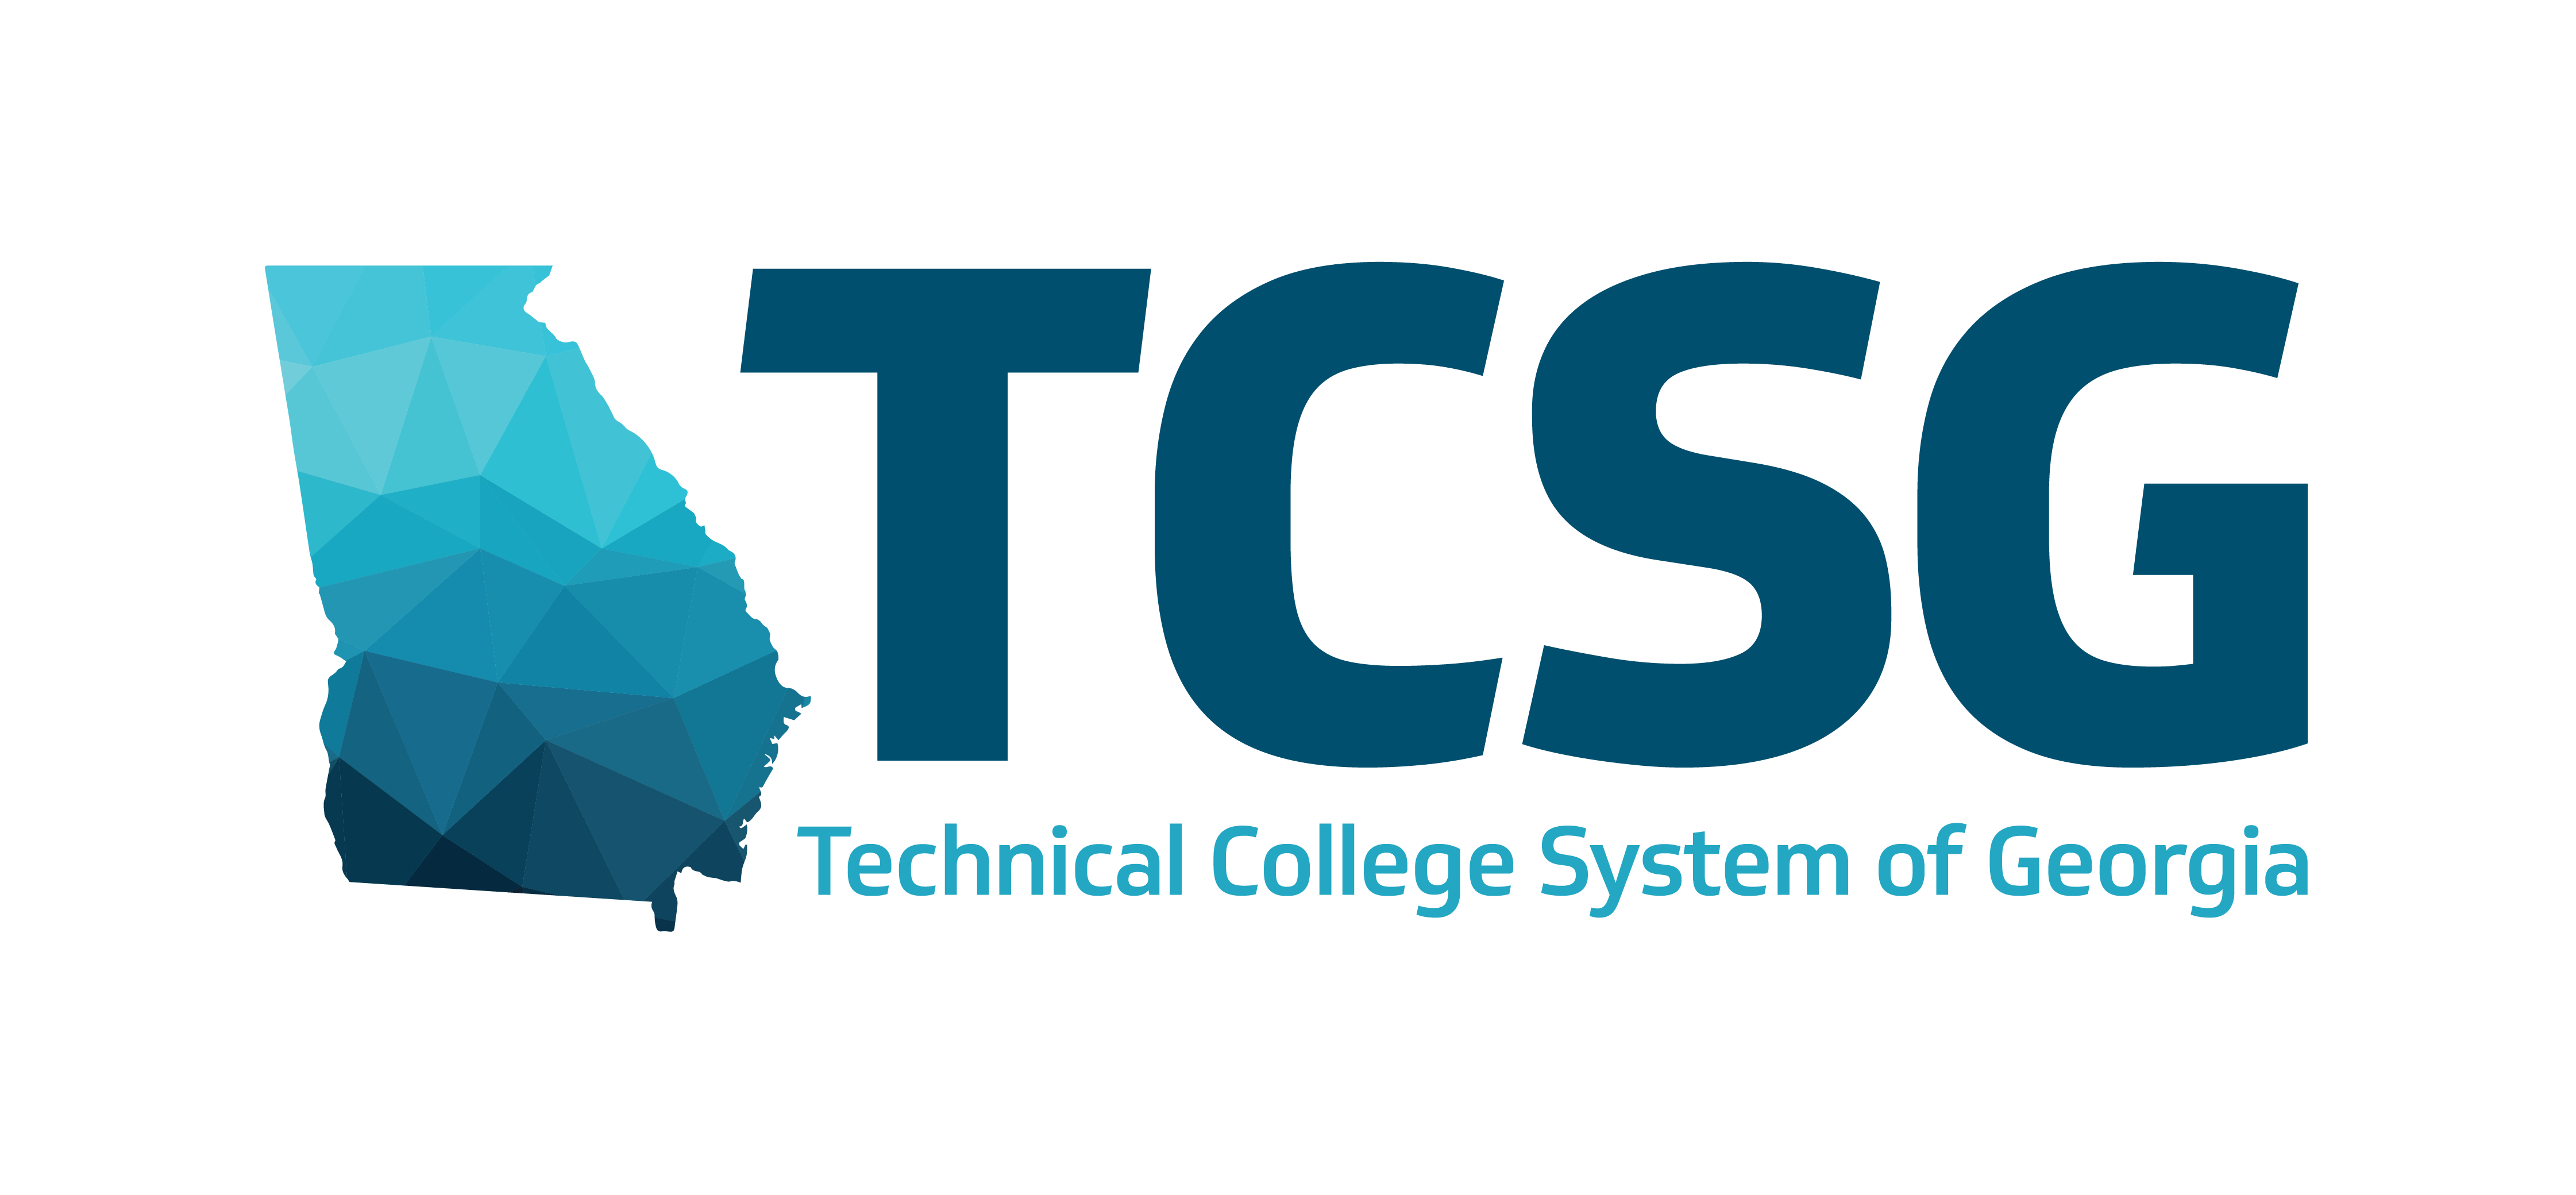 TCSG logo